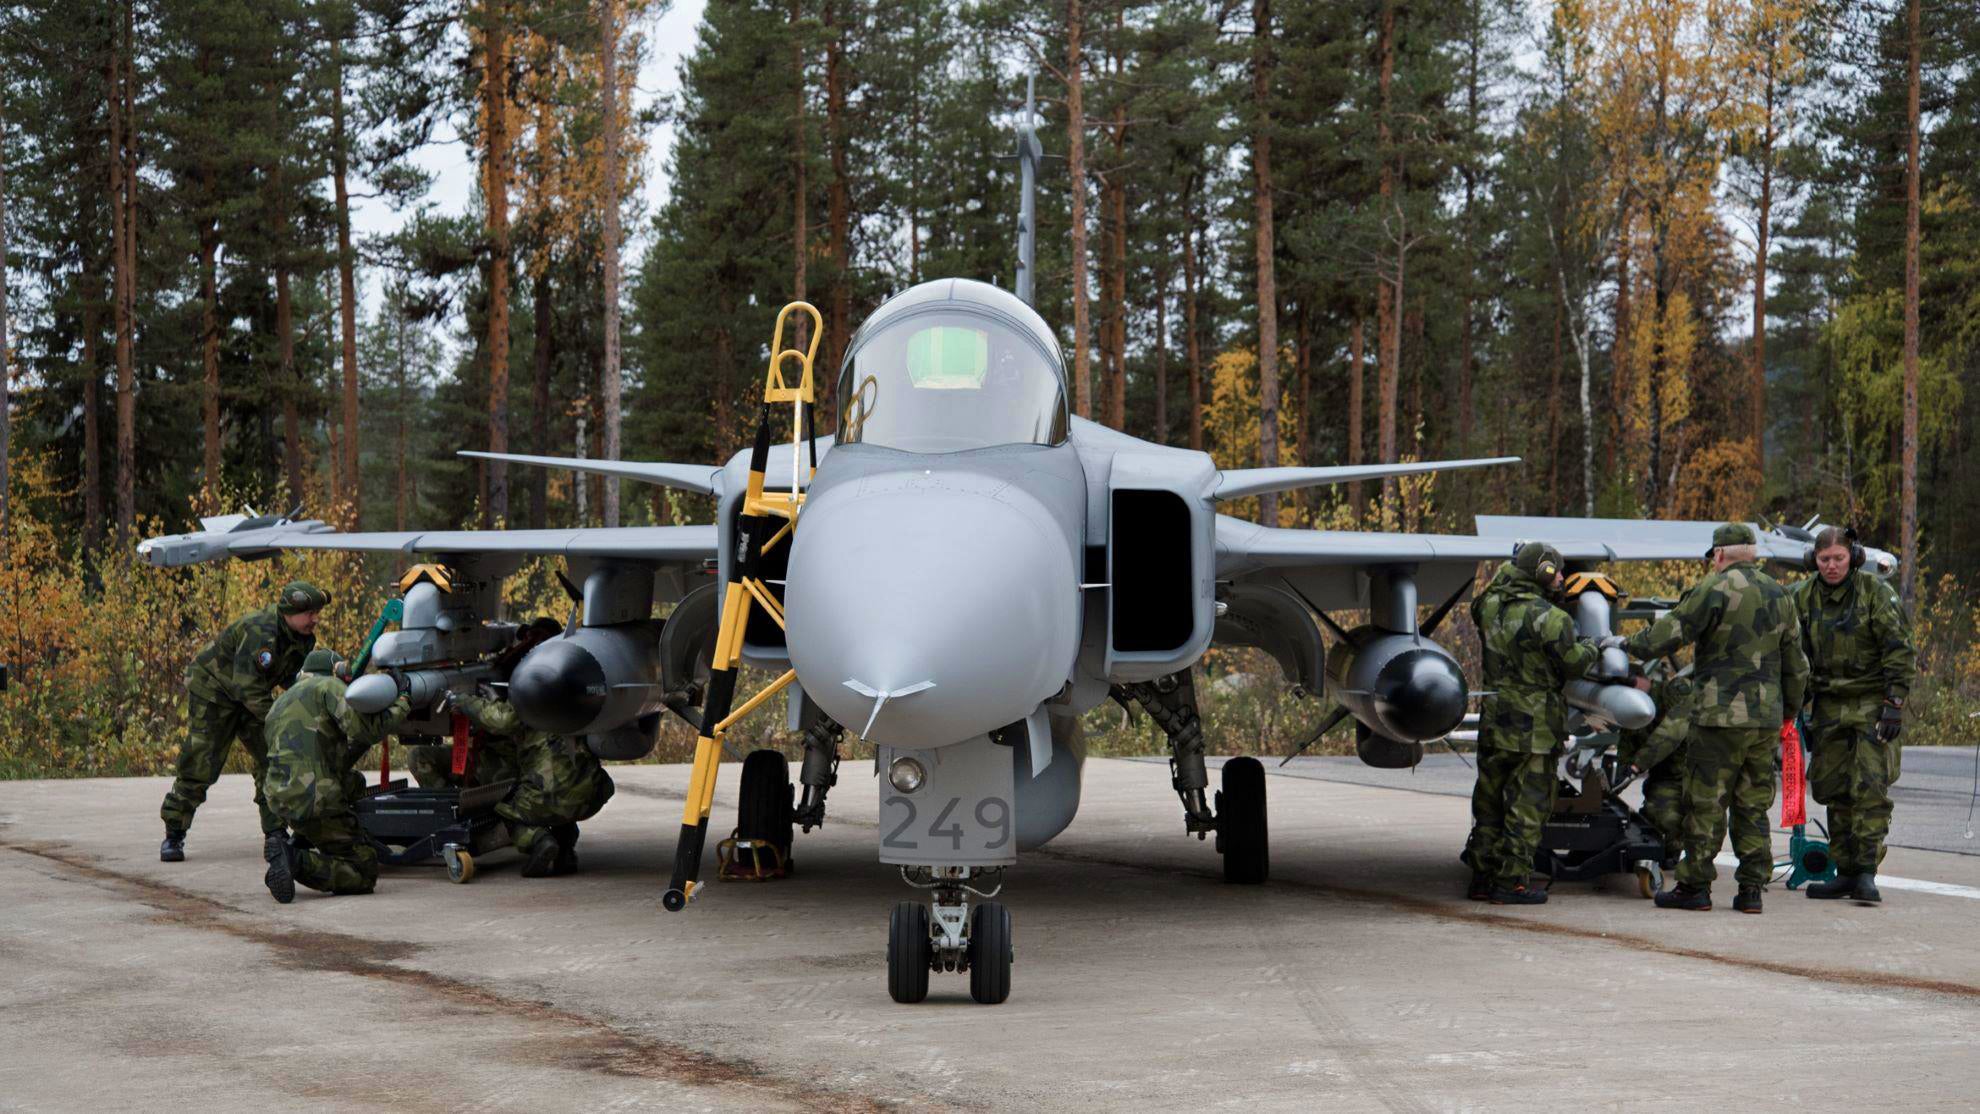 Sweden Contemplating Donating JAS 39 Gripens To Ukraine: Report